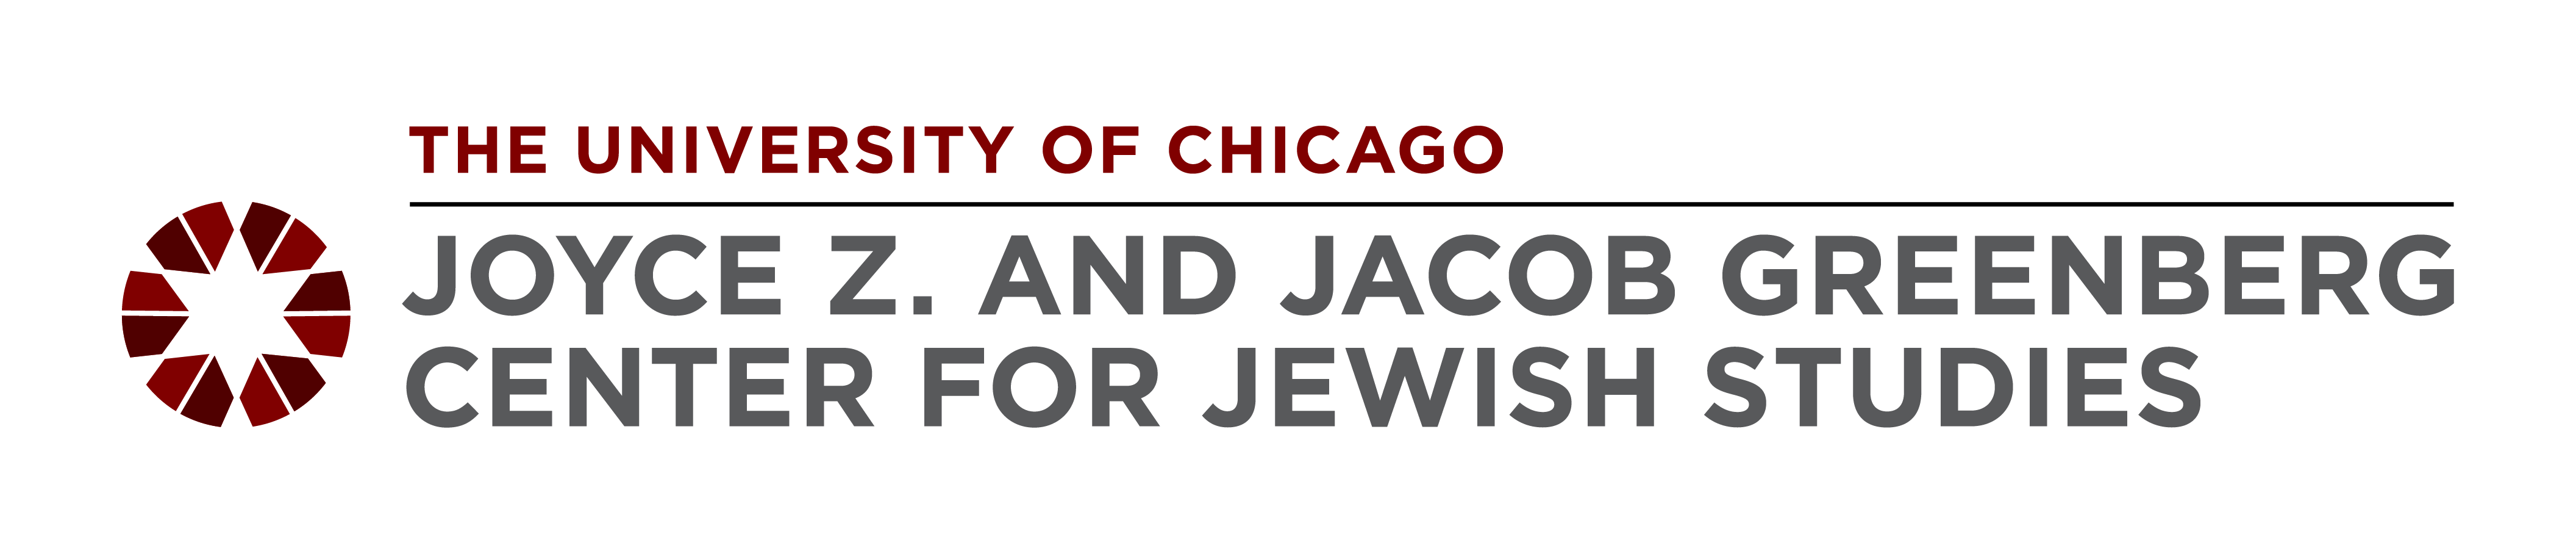 Greenberg Center for Jewish Studies logo